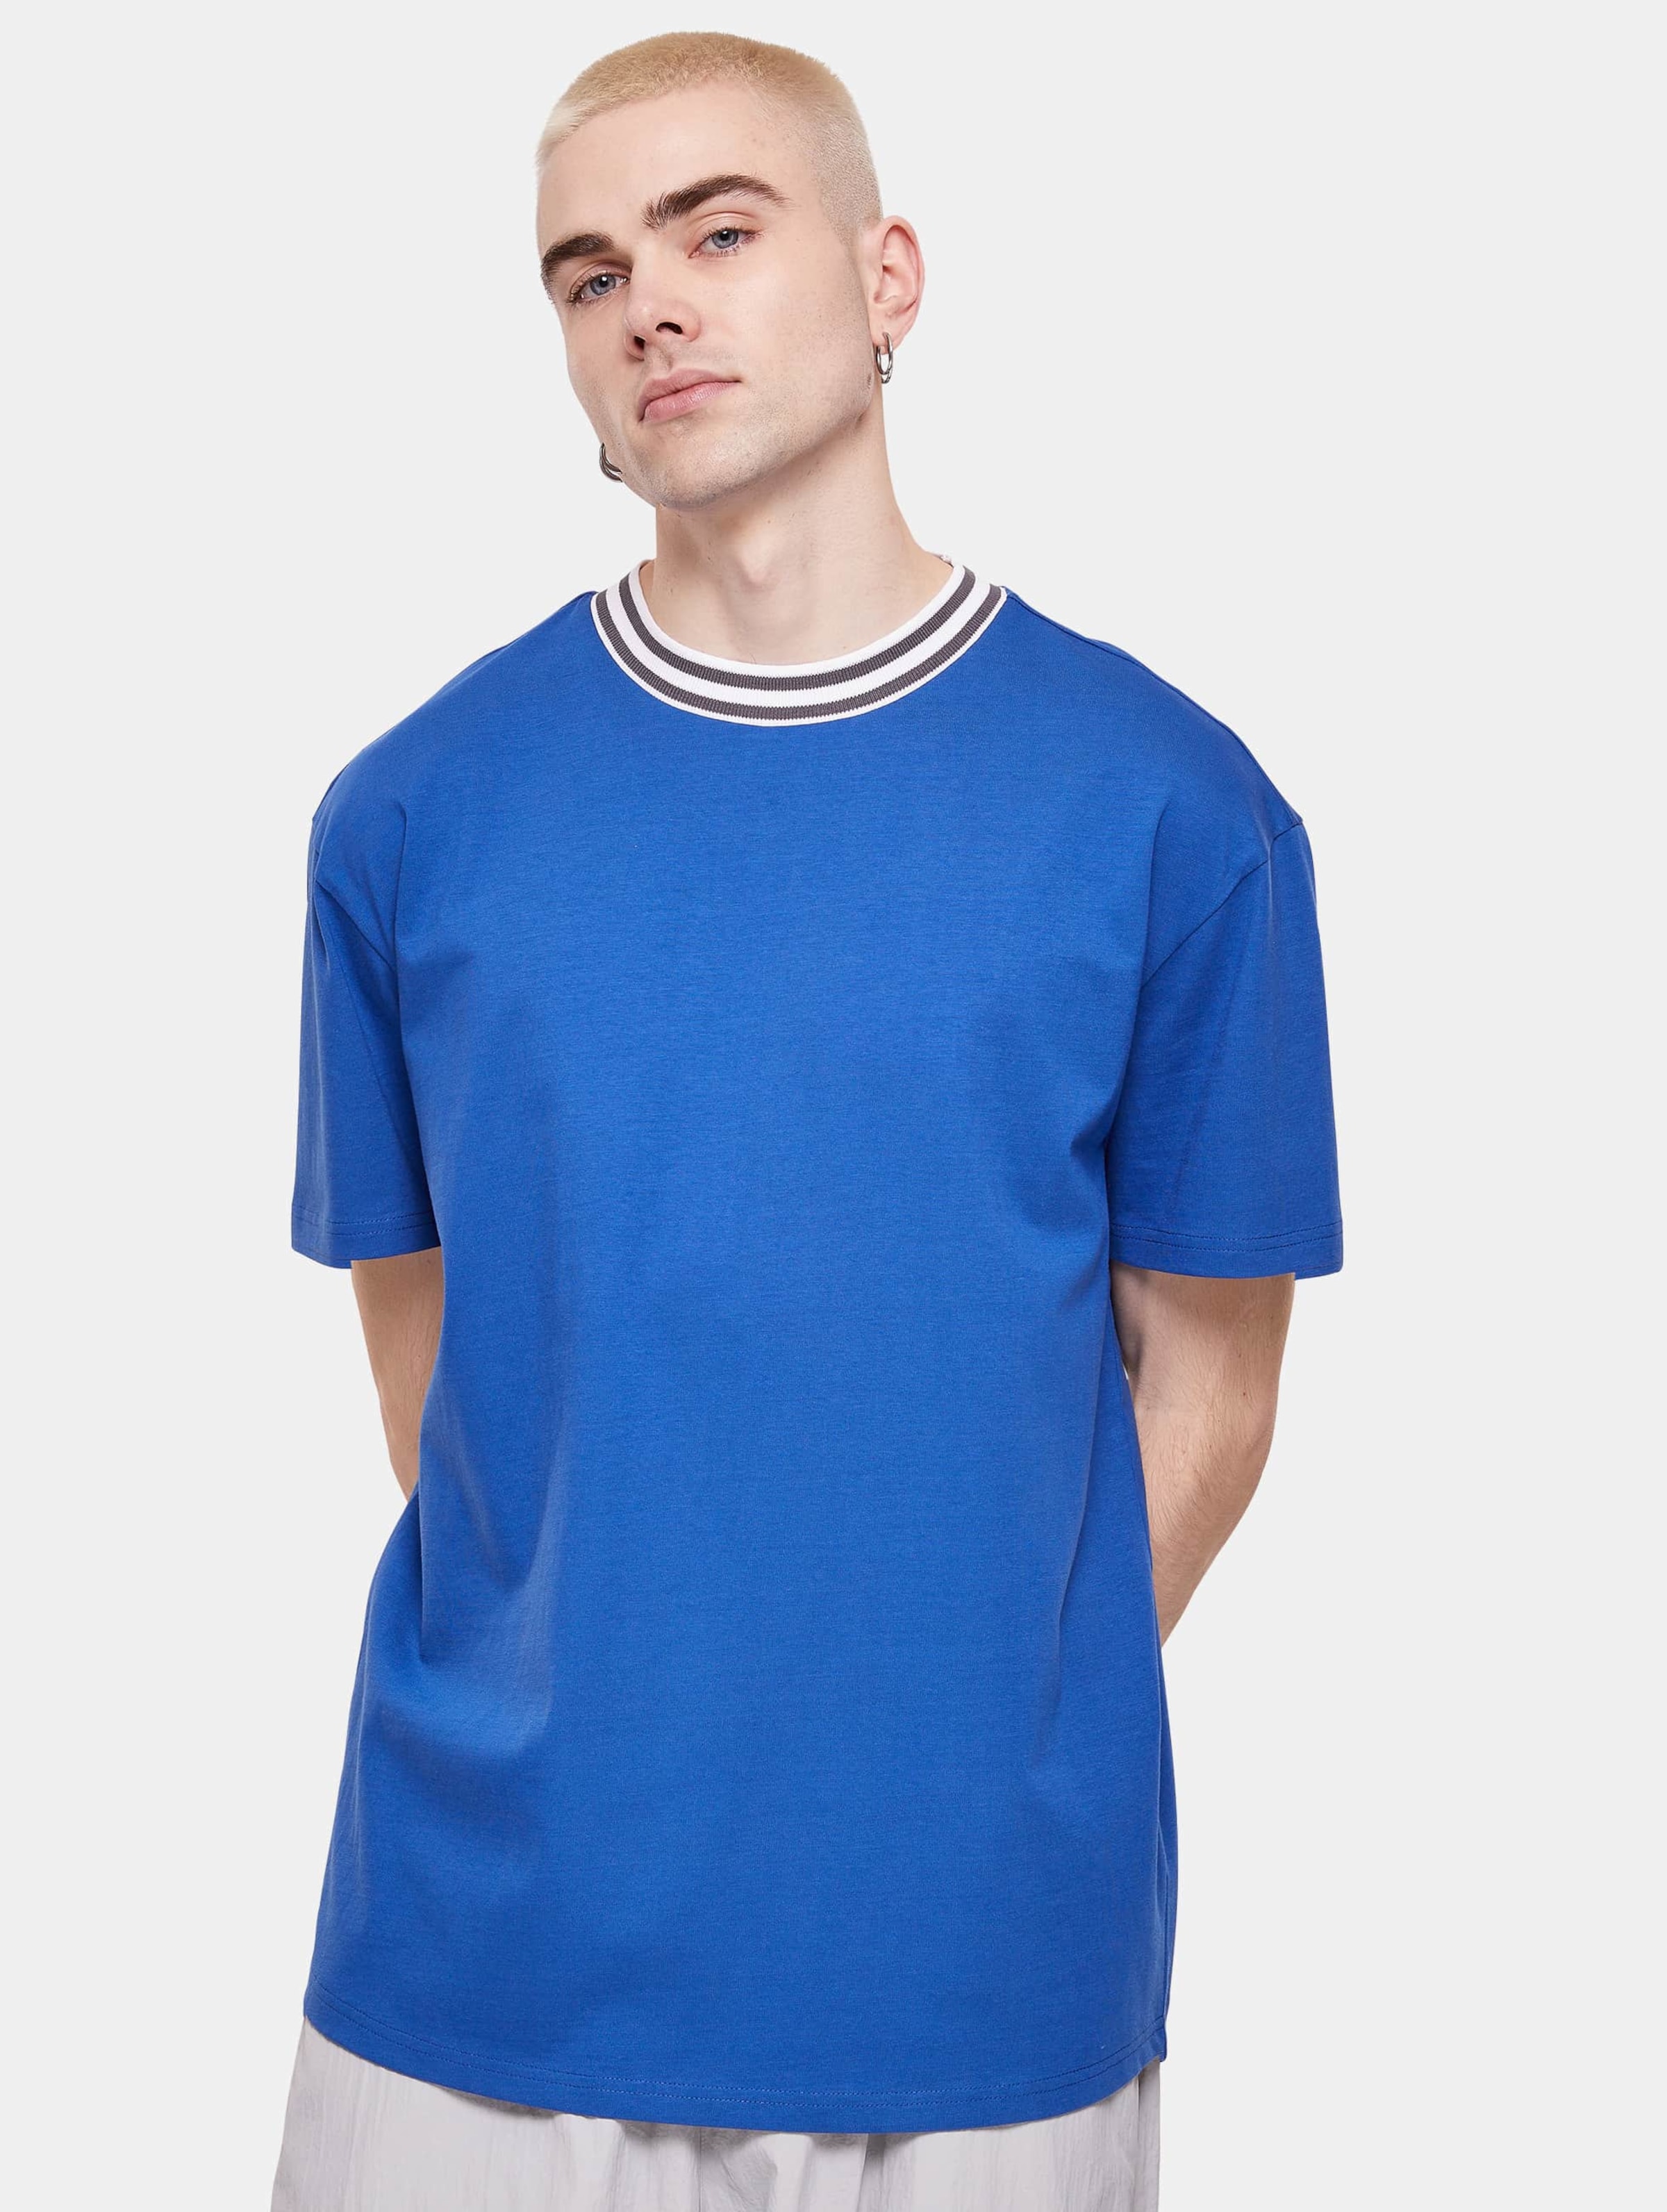 Urban Classics - Kicker Mens Tshirt - S - Blauw